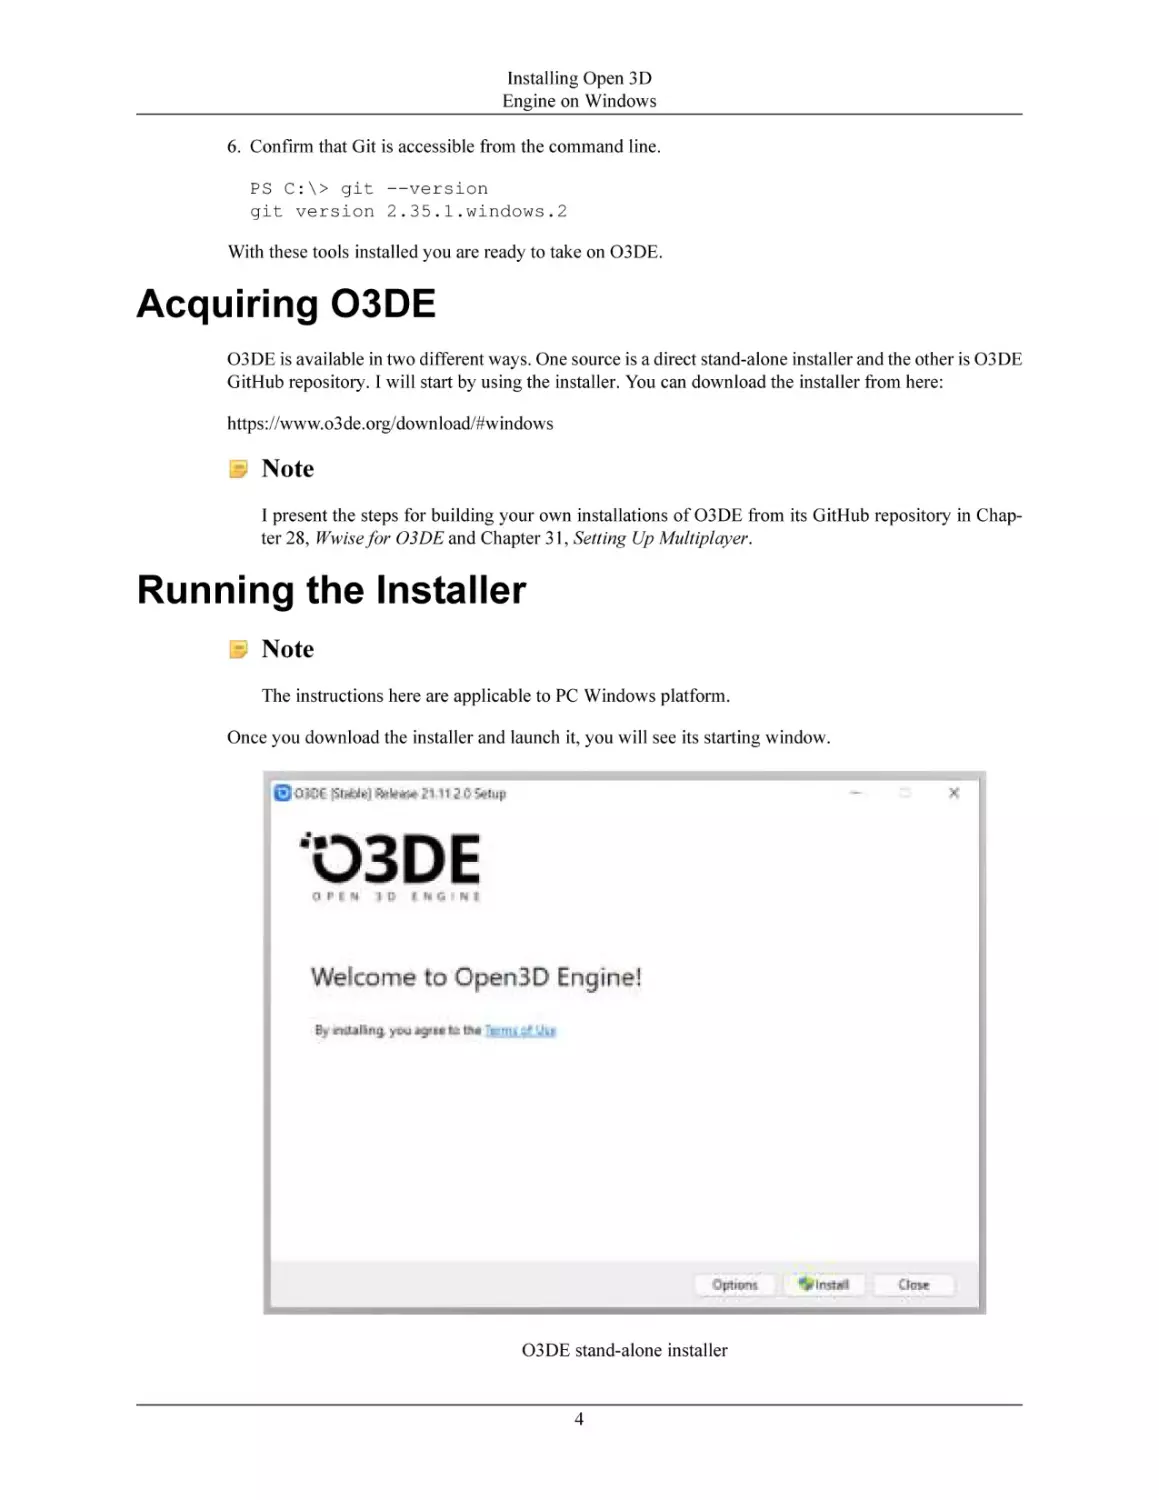 Acquiring O3DE
Running the Installer